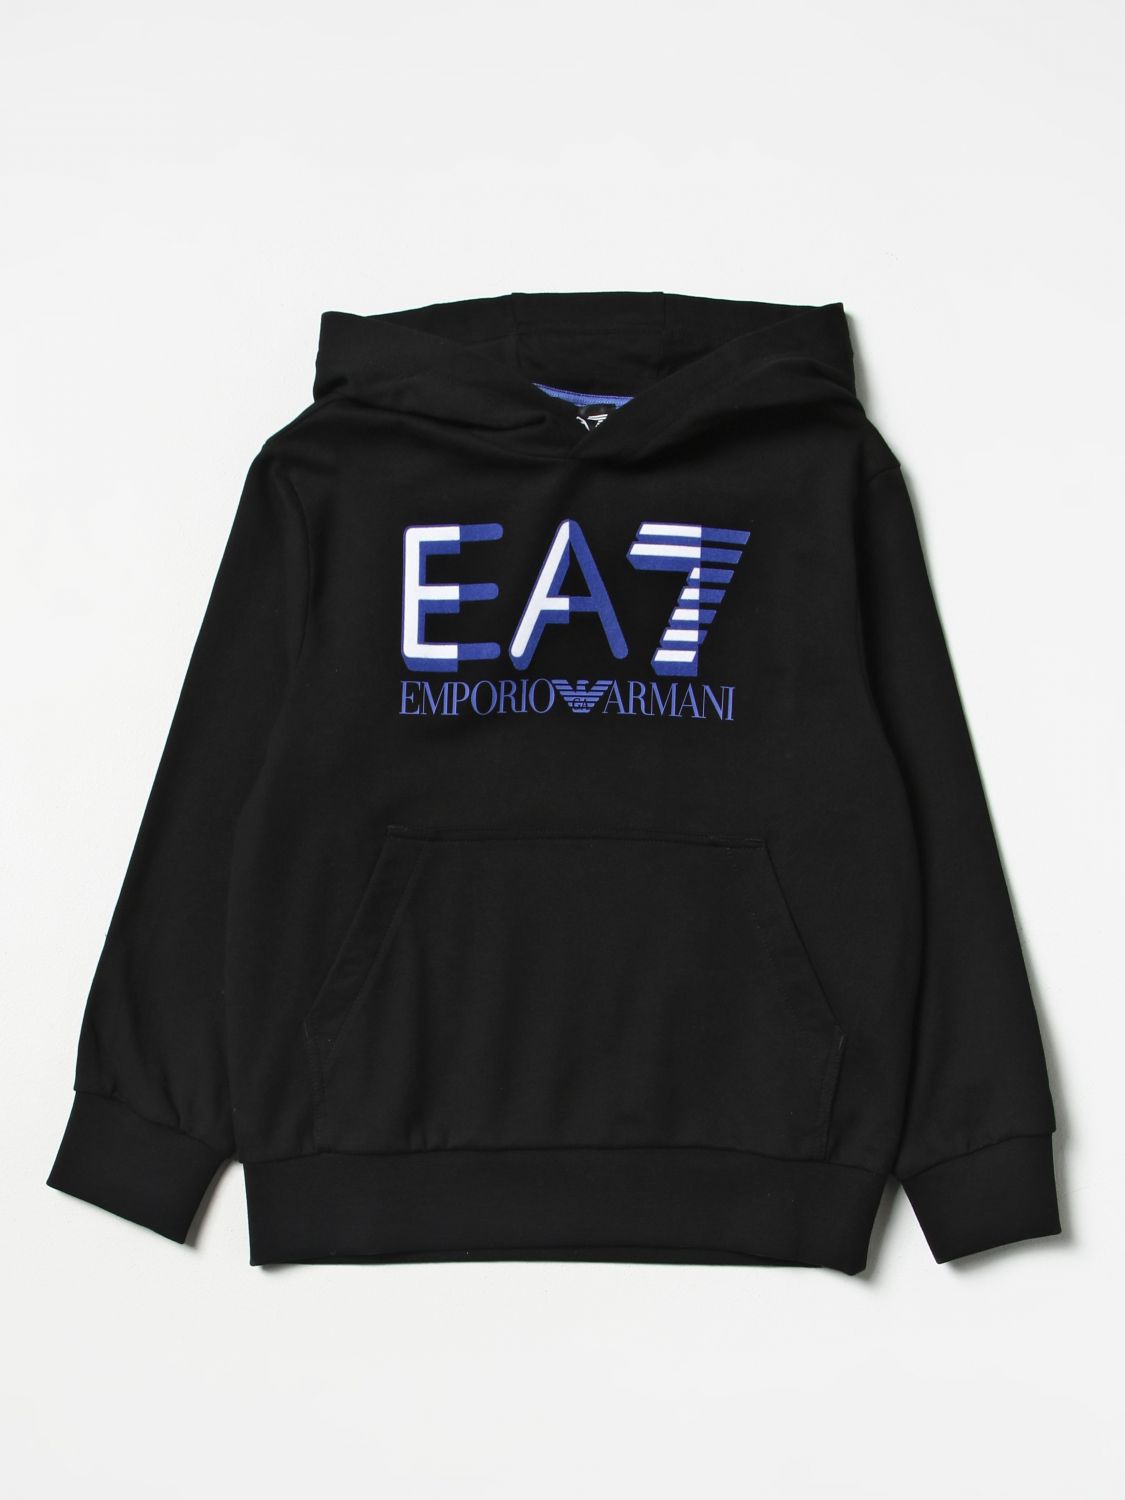 Ea7 Sweater  Kids Color Black